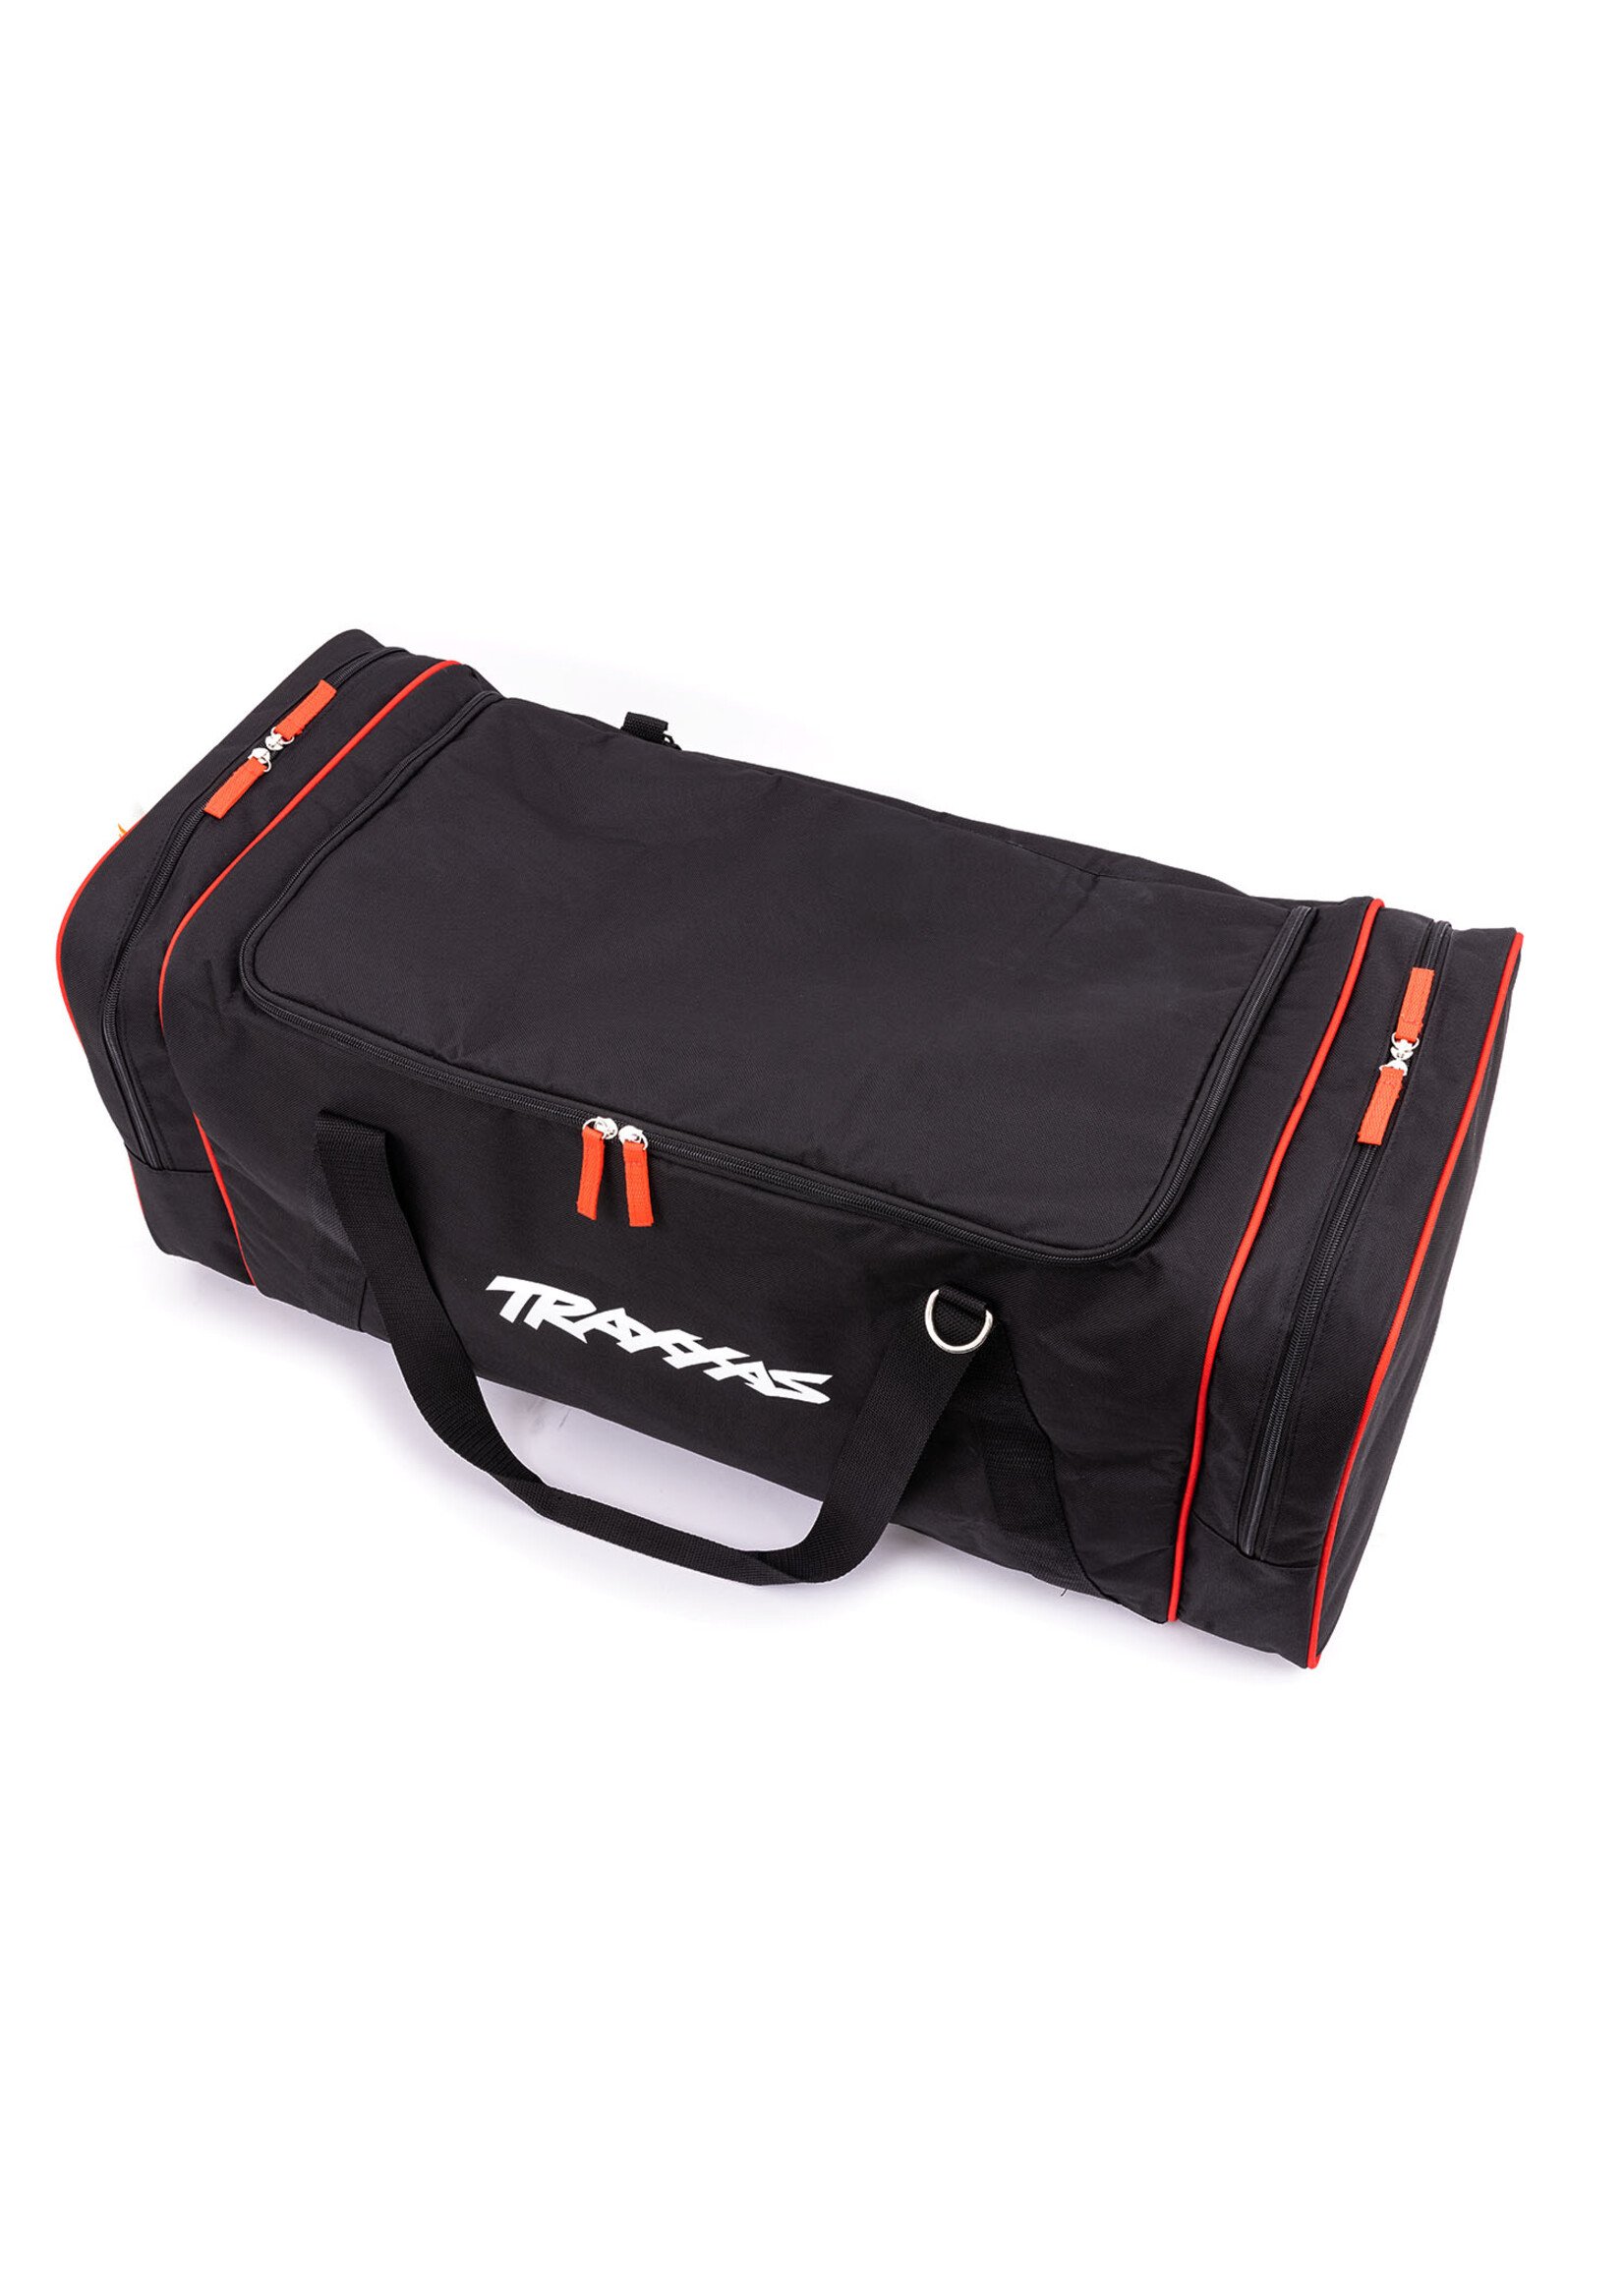 Traxxas 9917 - Medium Duffle Bag